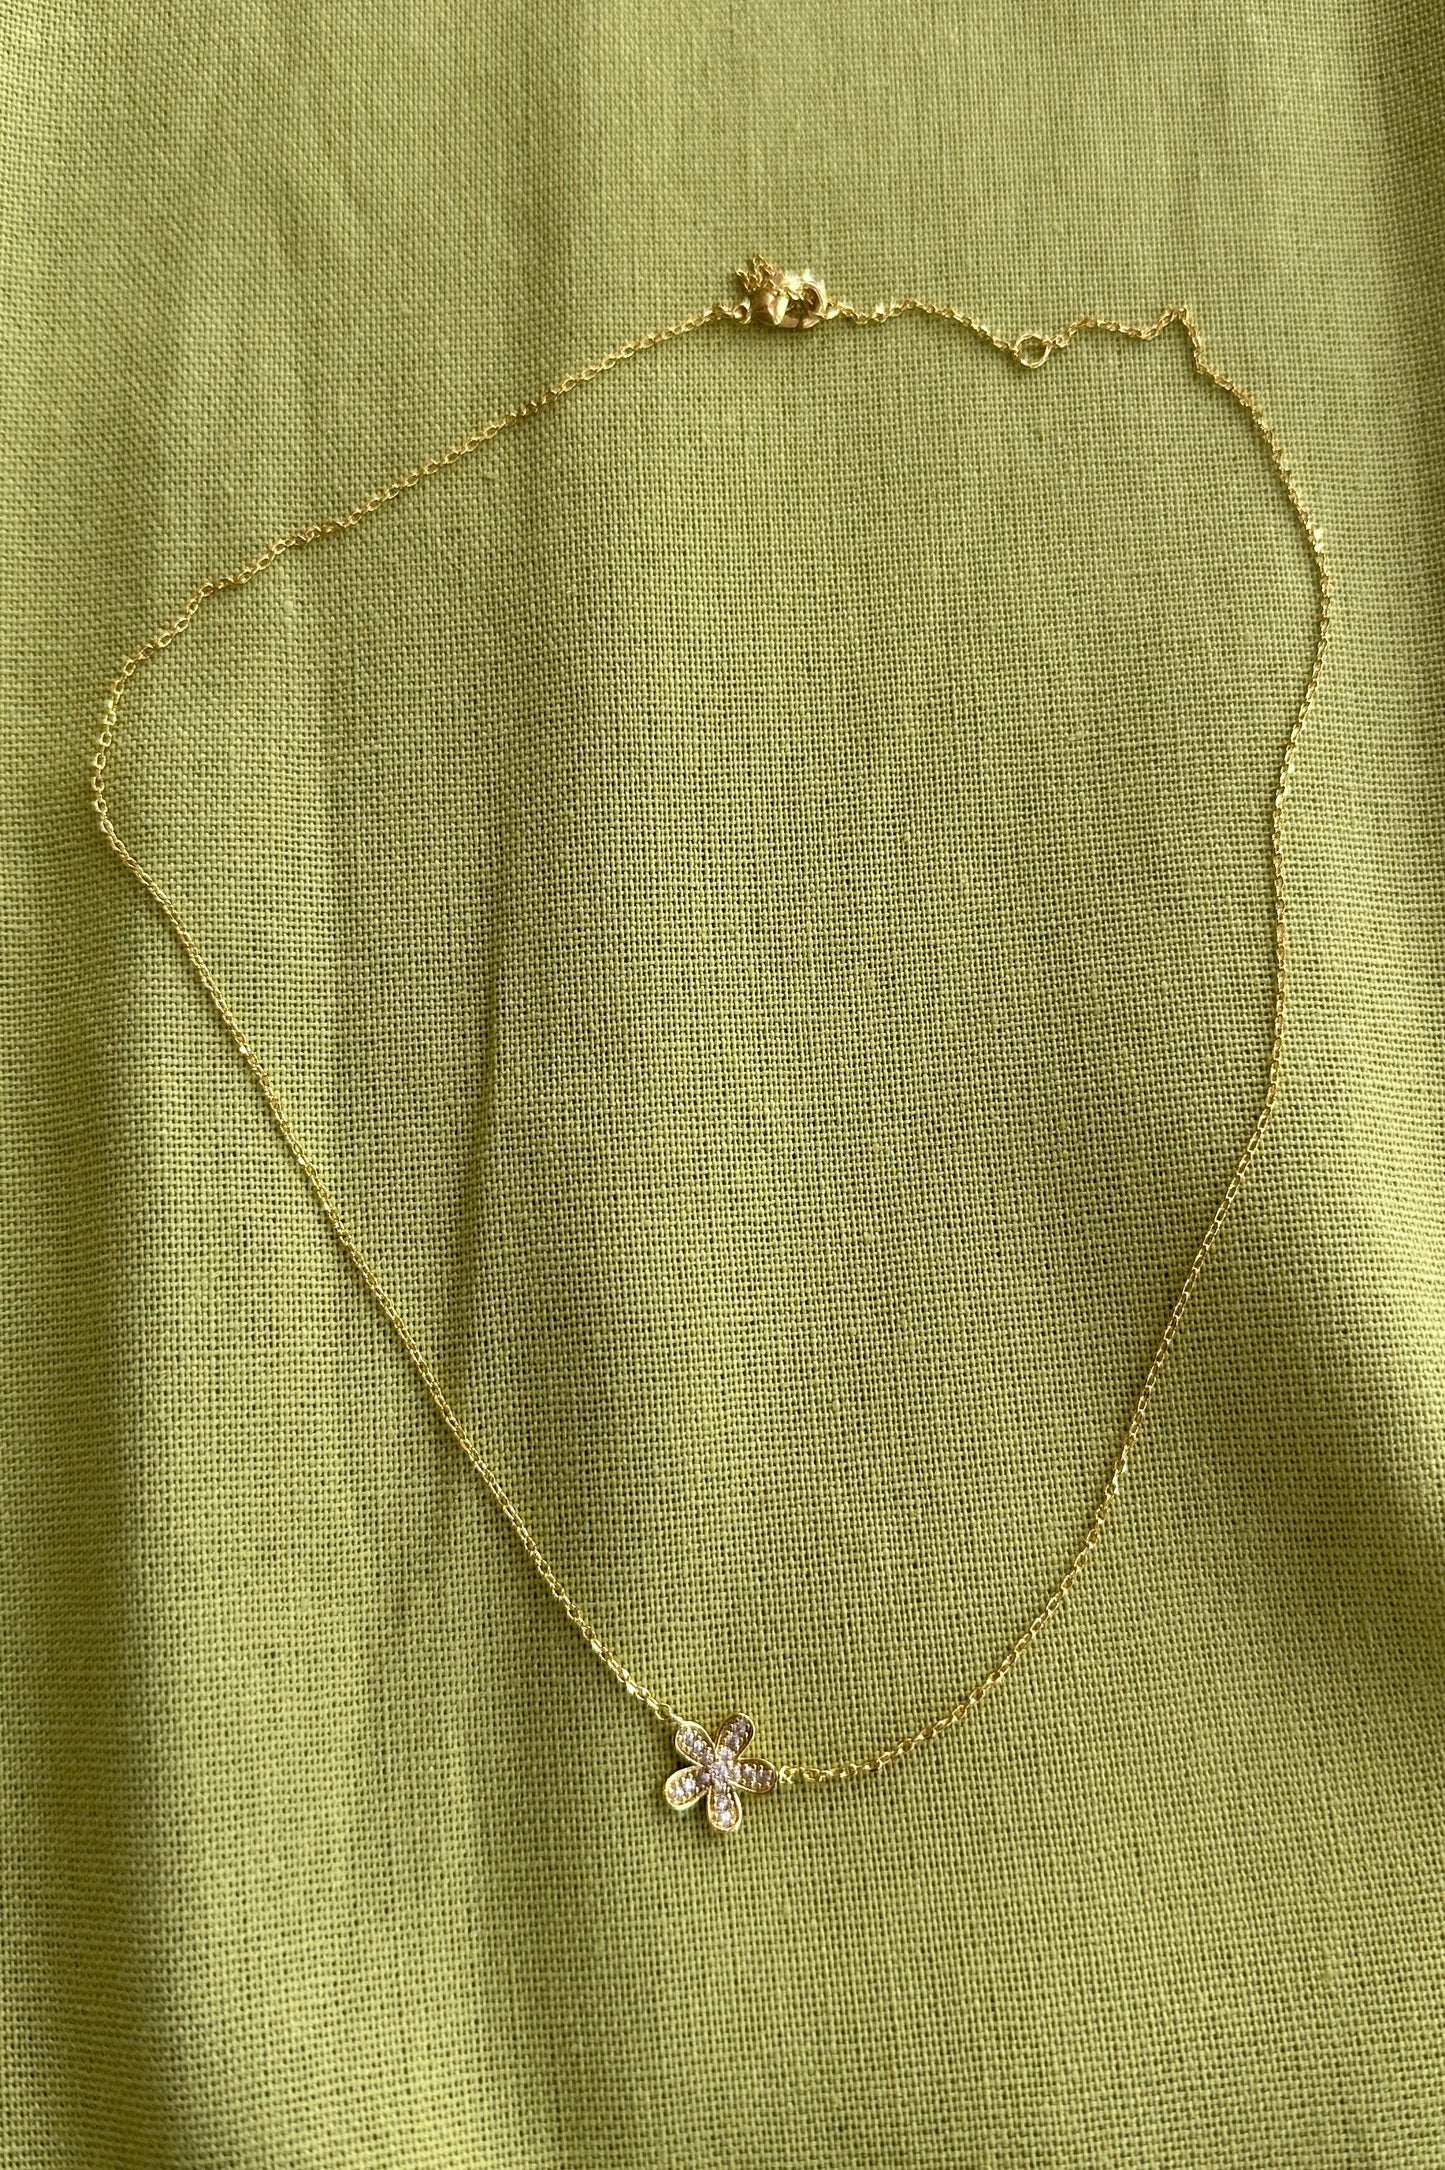 CZ Flower Necklace